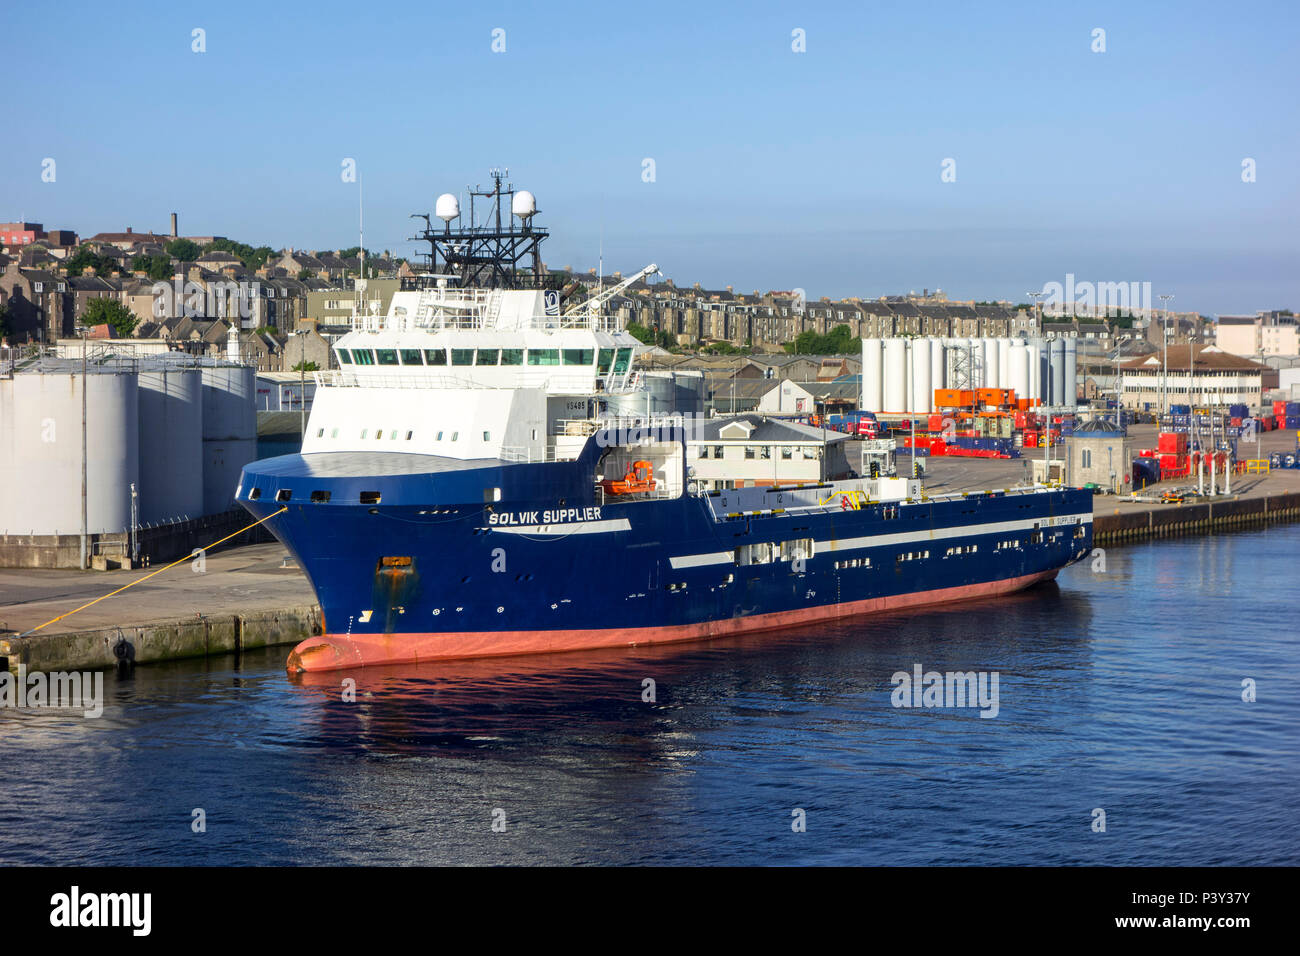 Solvik Supplier, offshore tug / supply ship docked in the Aberdeen port, Aberdeenshire, Scotland, UK Stock Photo